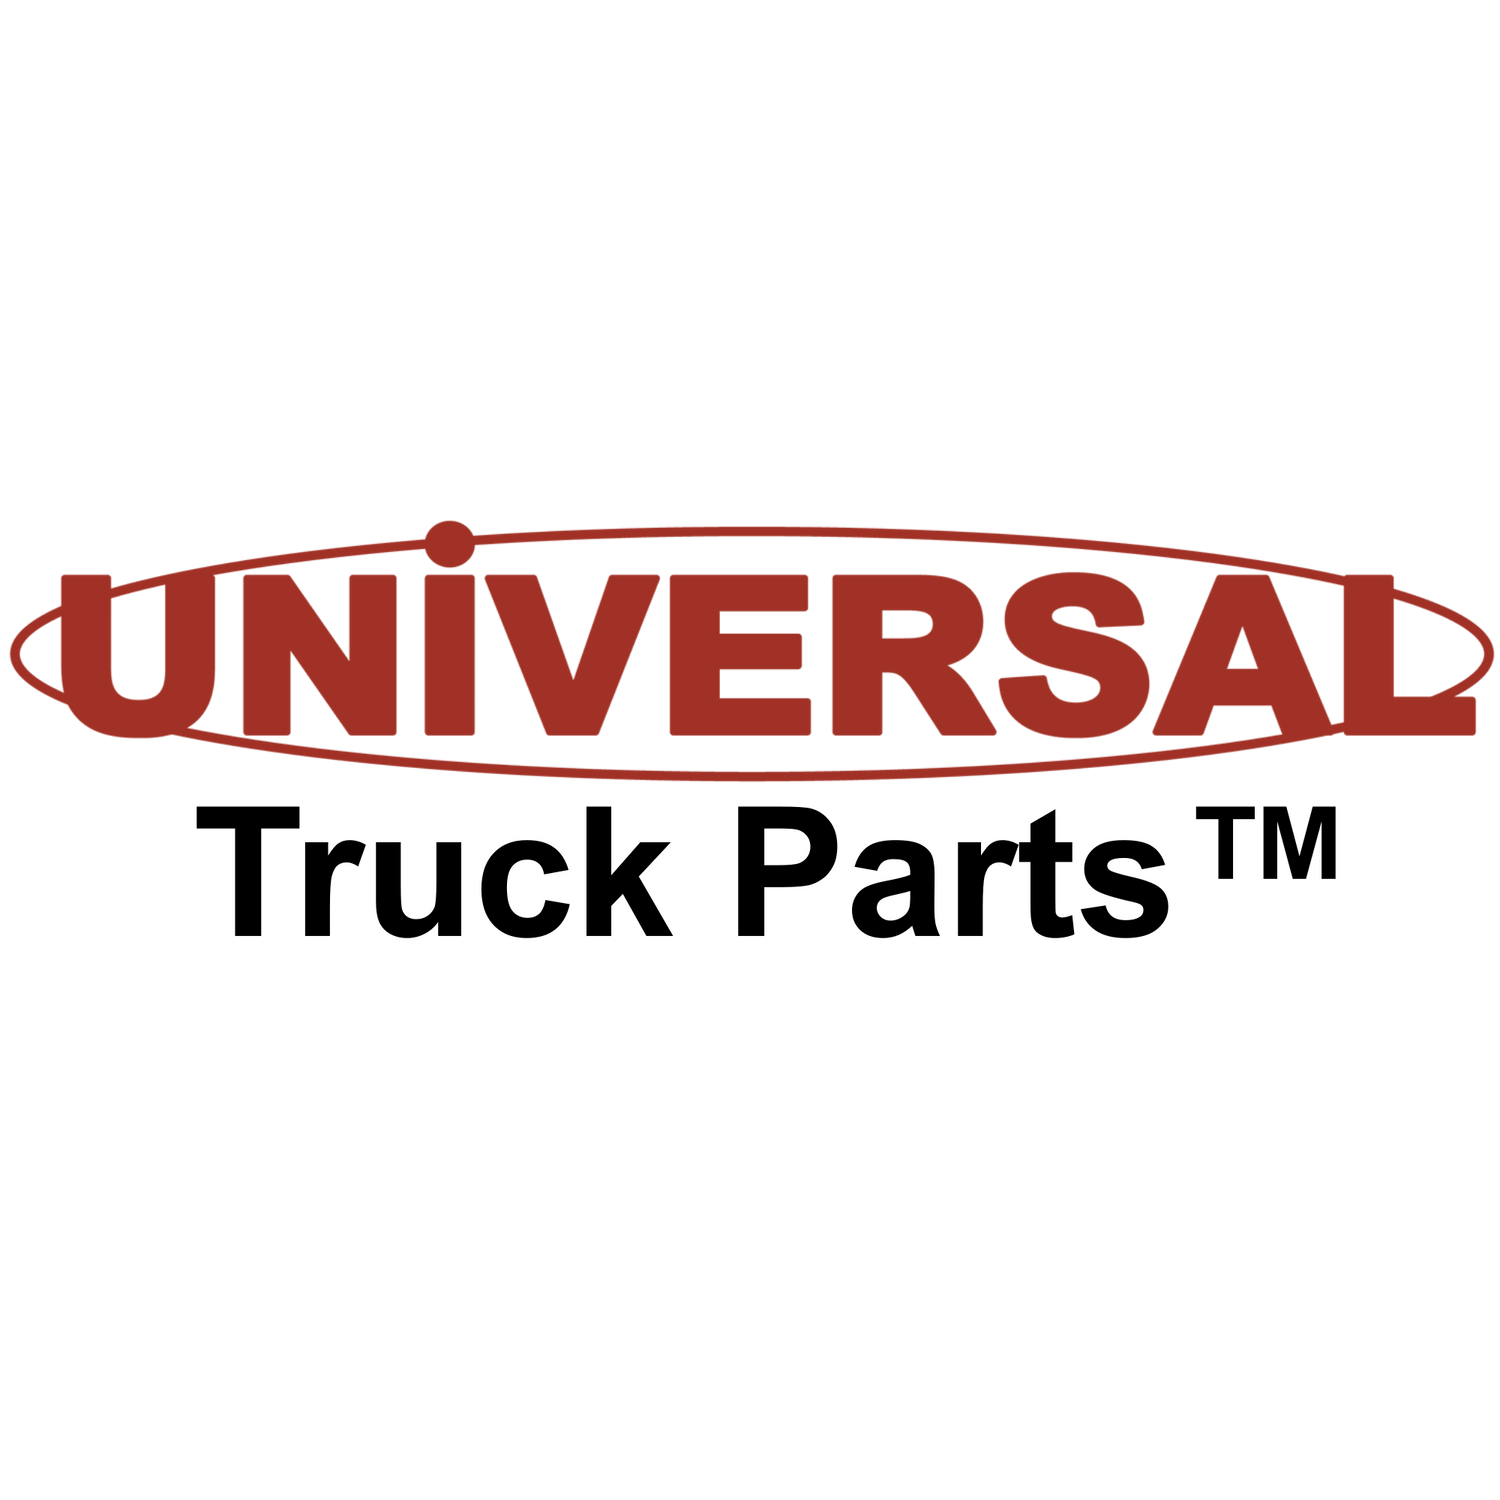 Universal Truck Parts Shop Logo